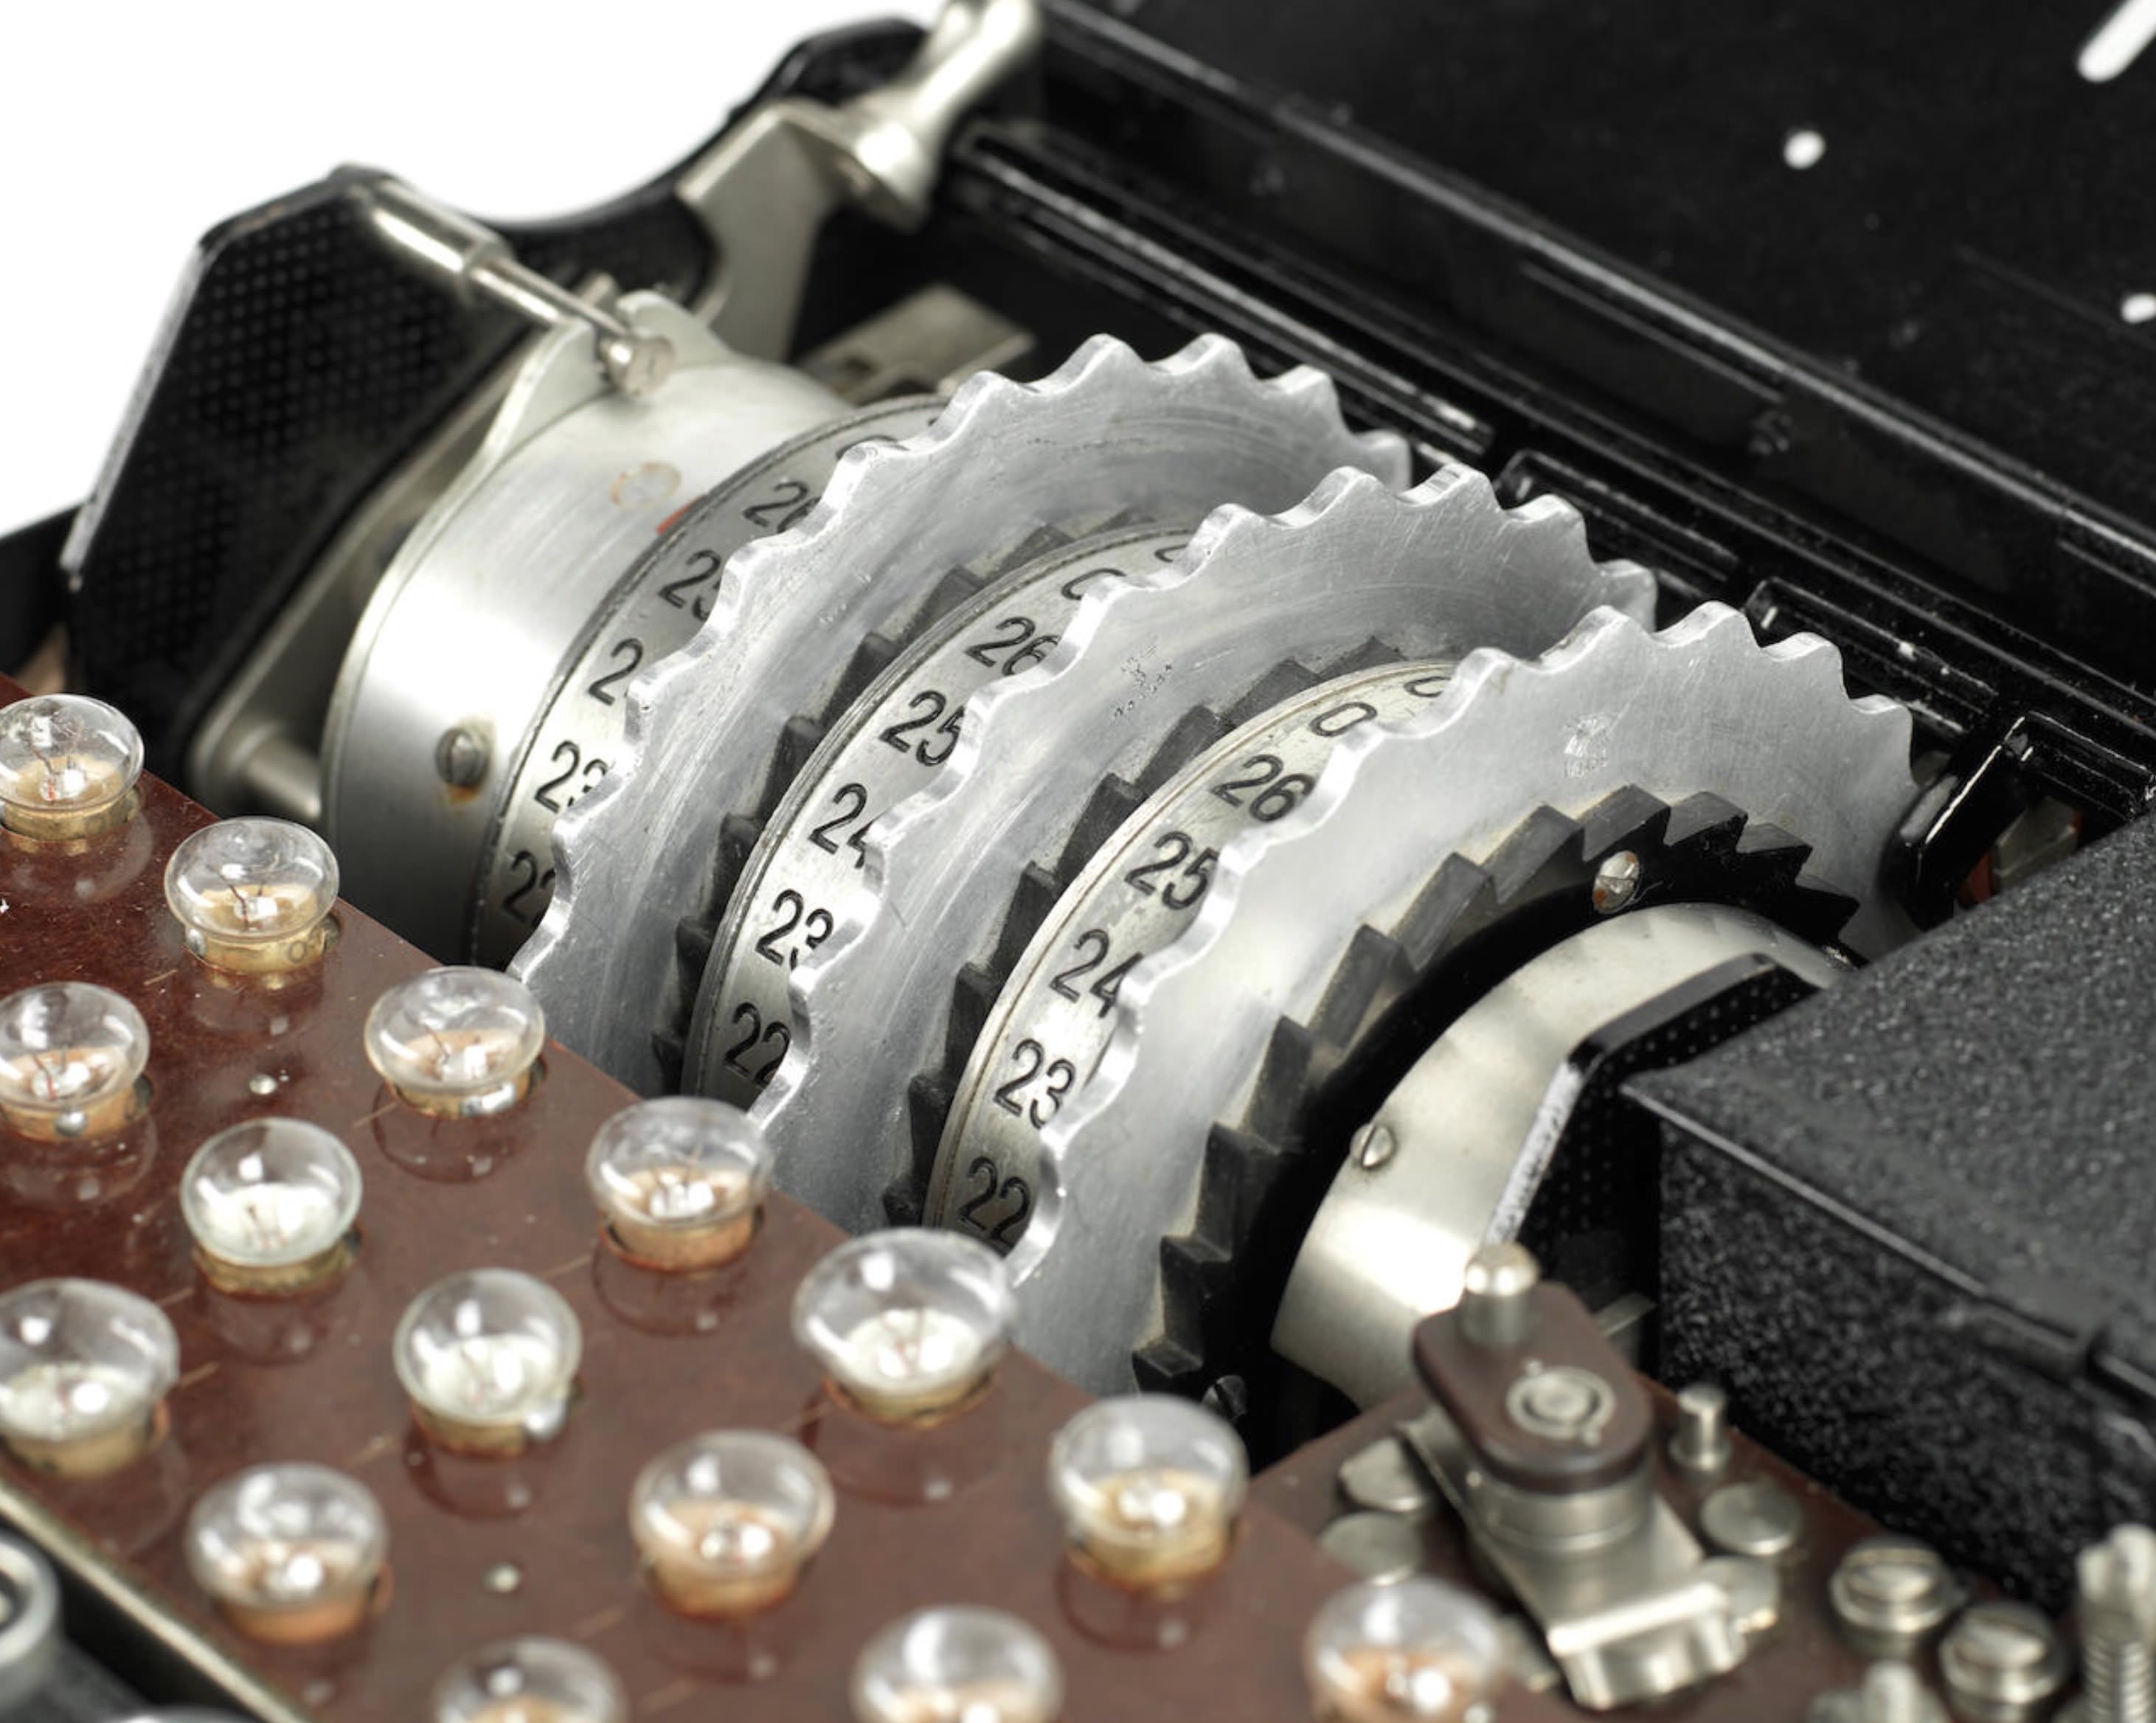 A Threerotor Enigma Cipher Machine Circa 1939 Christie39s